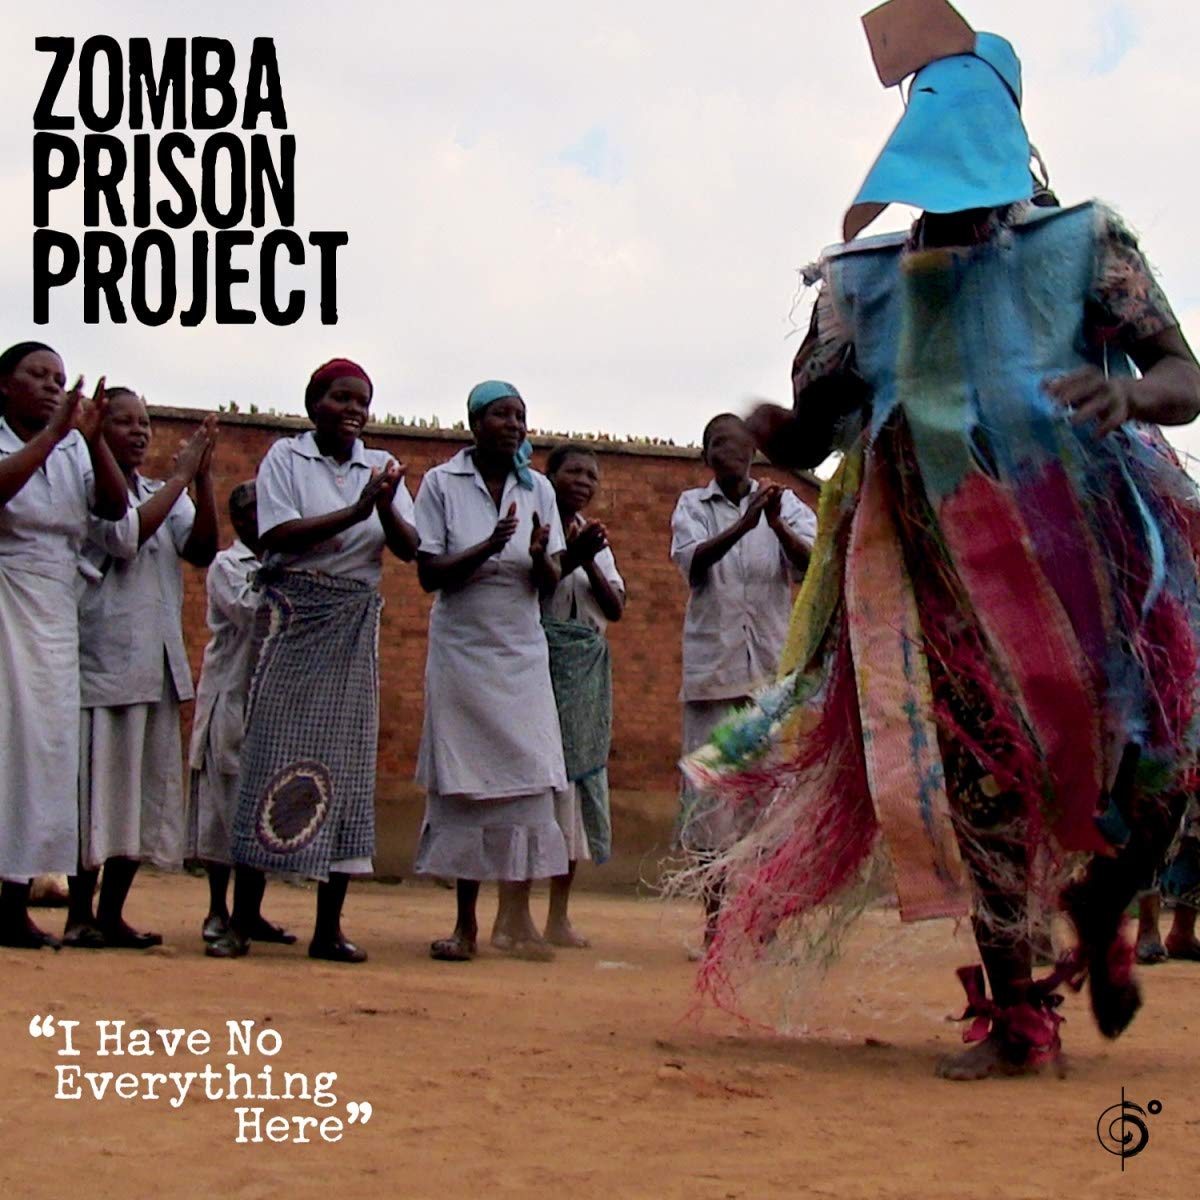 Zomba Prison Project